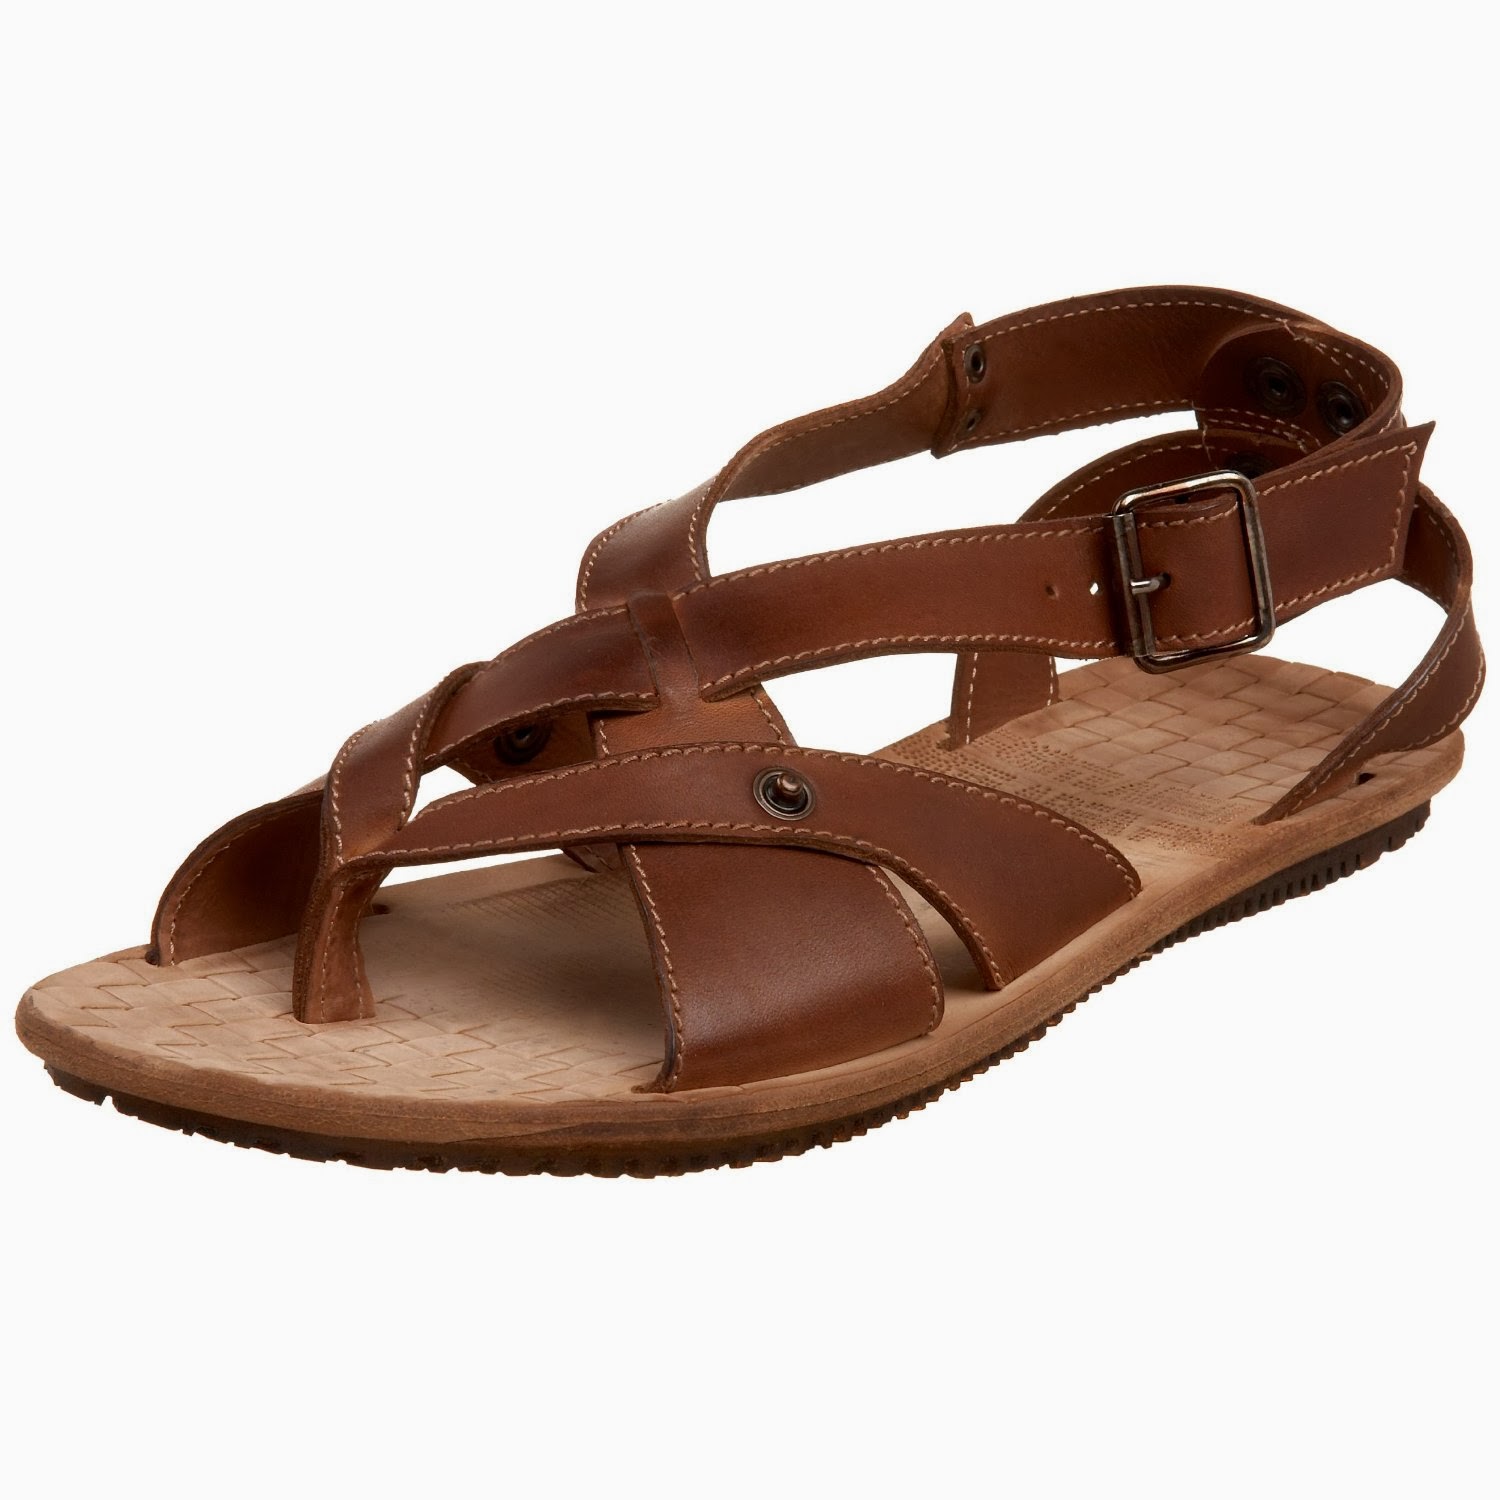 toe loop sandals: Area Forte Men's 3702 Sandal